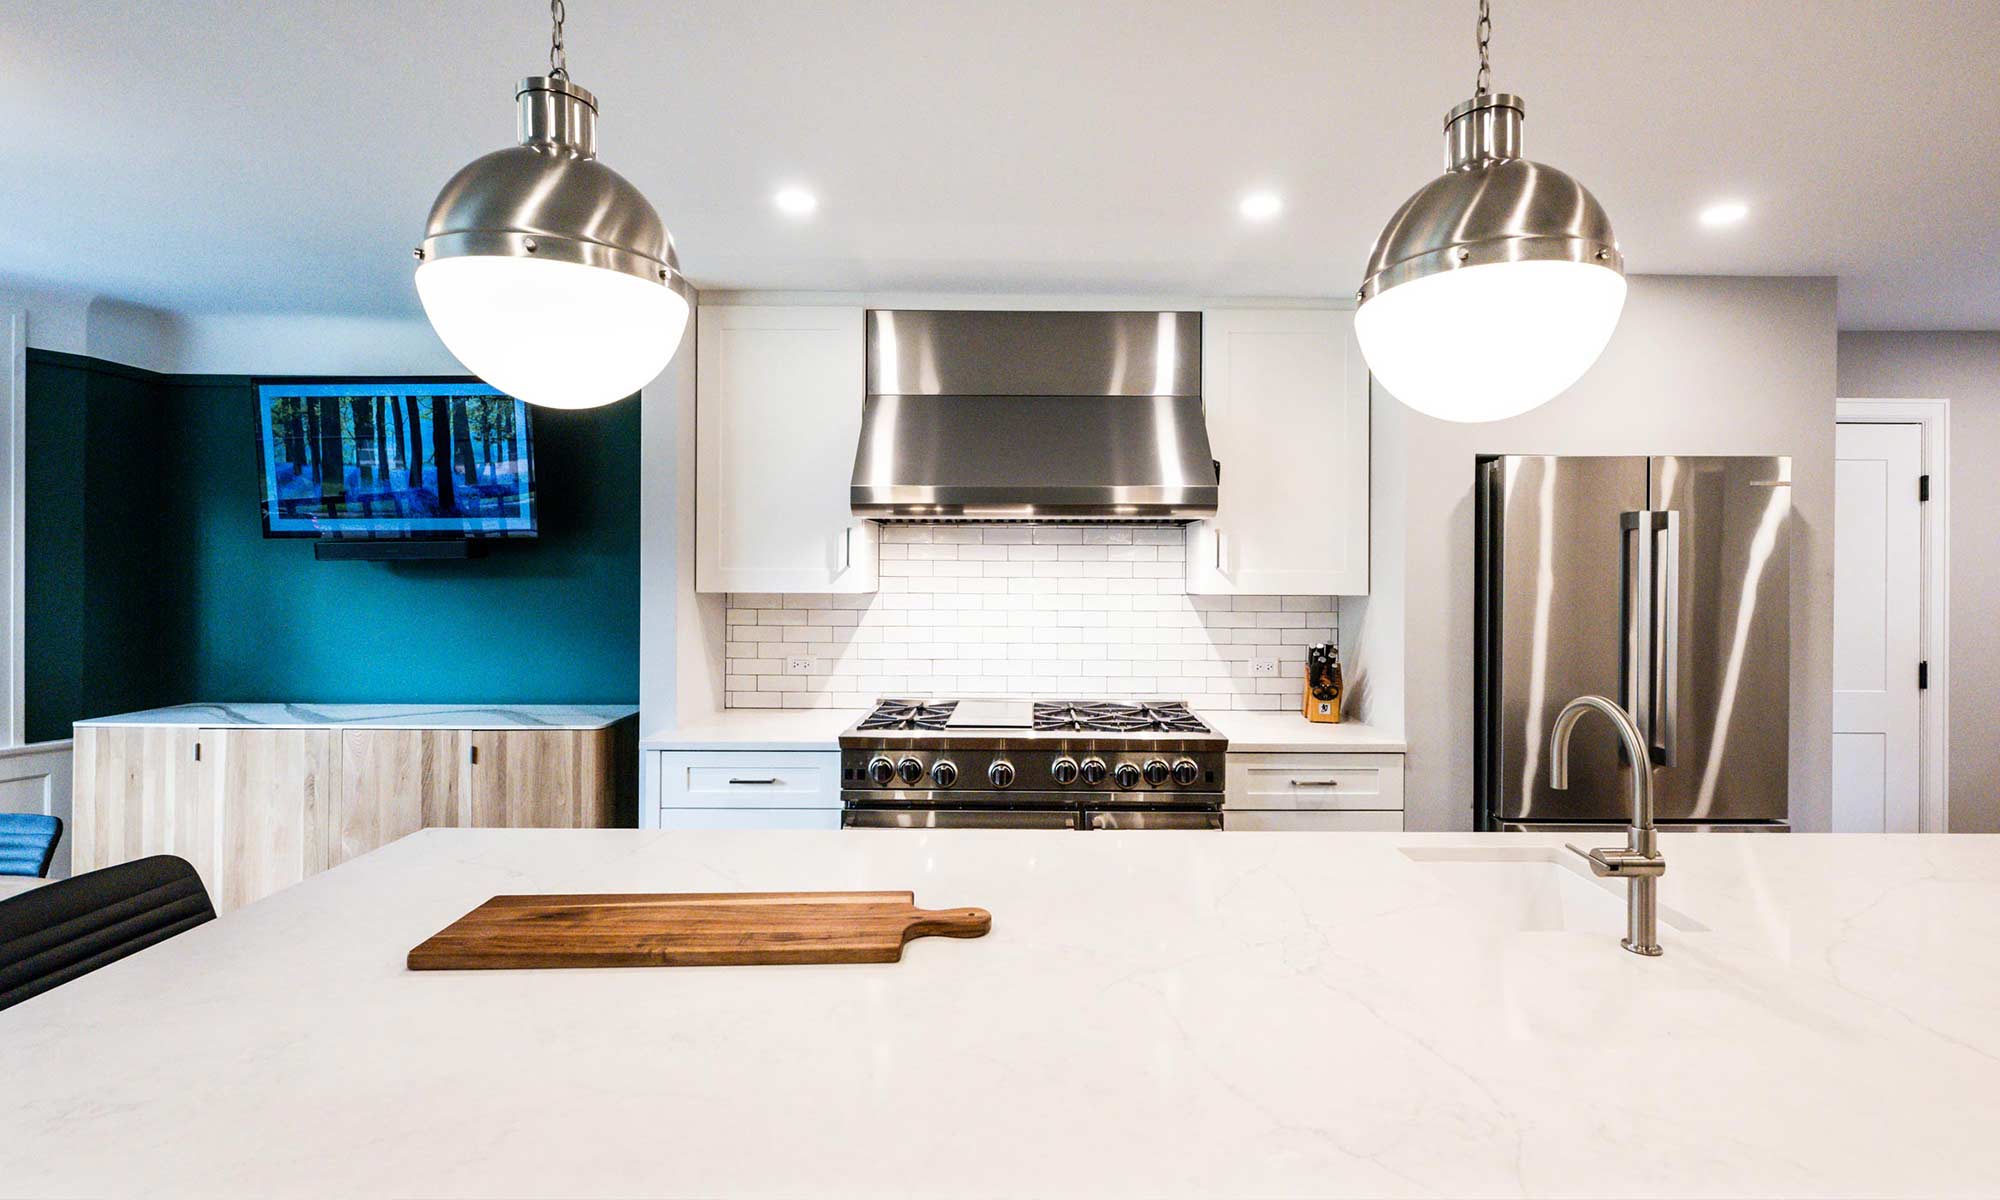 bluestar cooking range in luxury riverside Illinois kitchen remodel